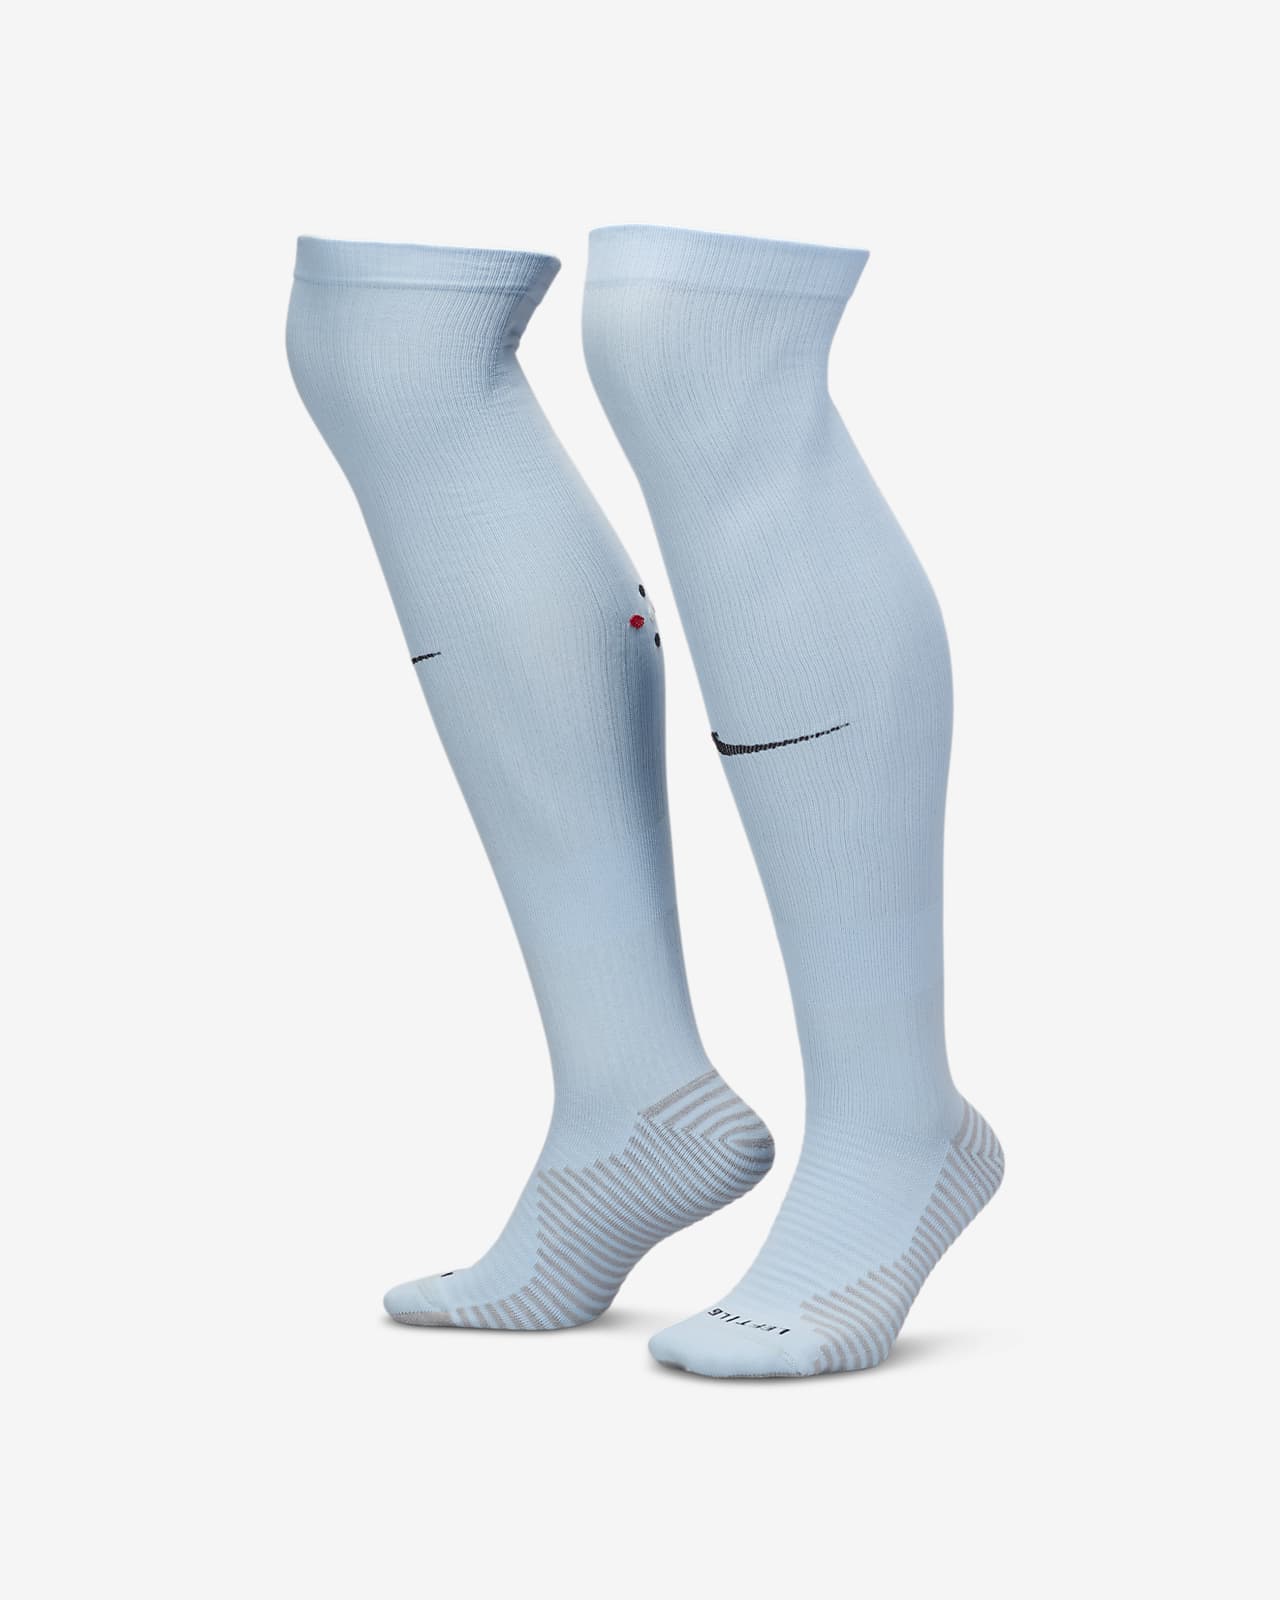 Socks Nike Strike Crew   - Football boots & equipment